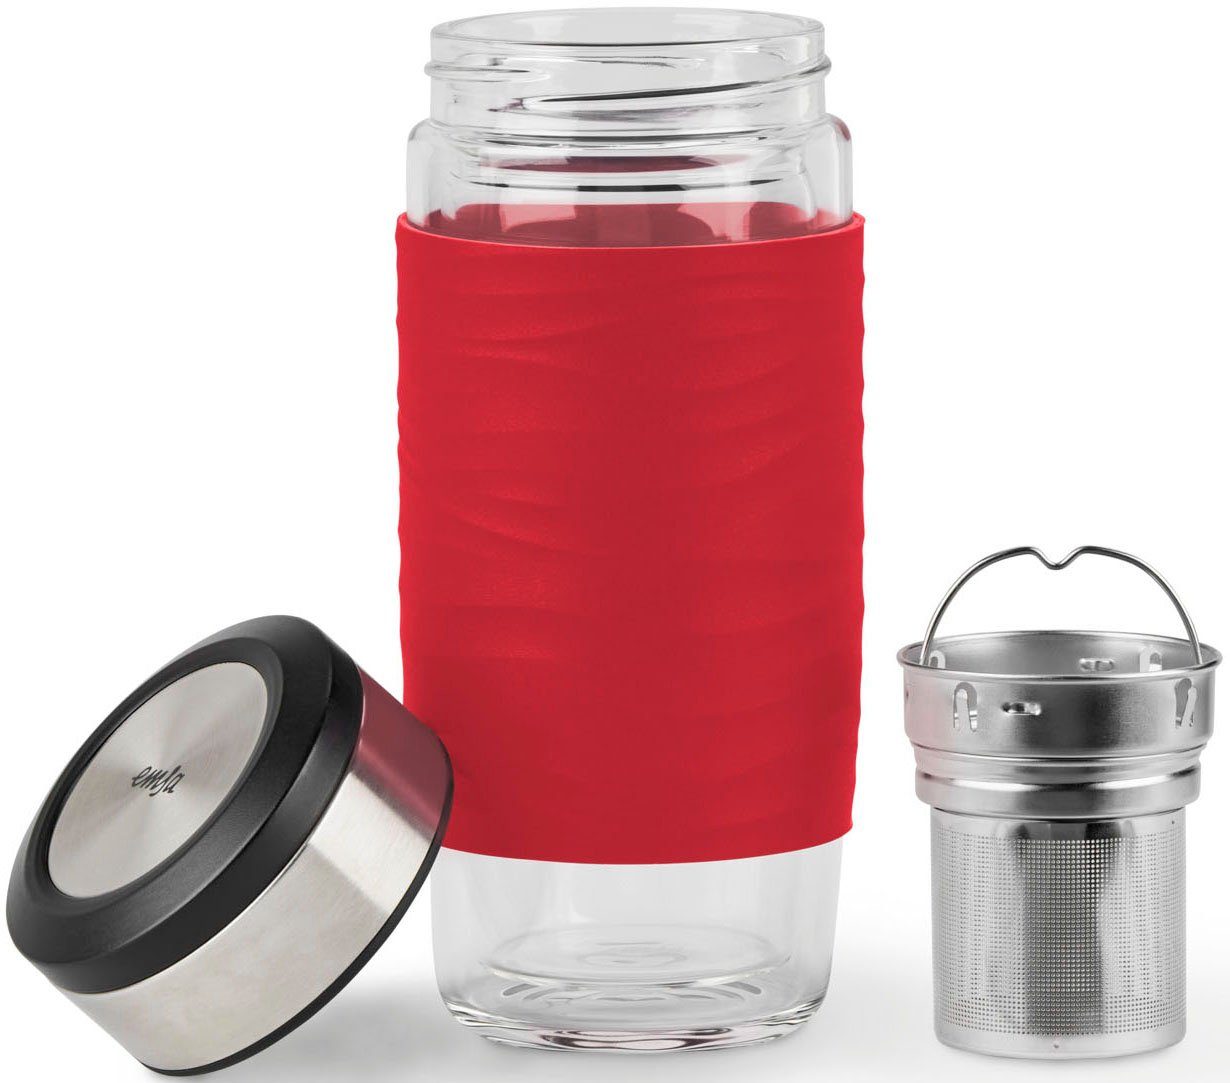 Emsa Thermobecher Tea Mug, Edelstahl, 3-teilig, Glas, herausnehmbarem ml, Tee-Sieb rot/edelstahlfarben/transparent 100% 400 dicht, Teebecher, mit Silikon